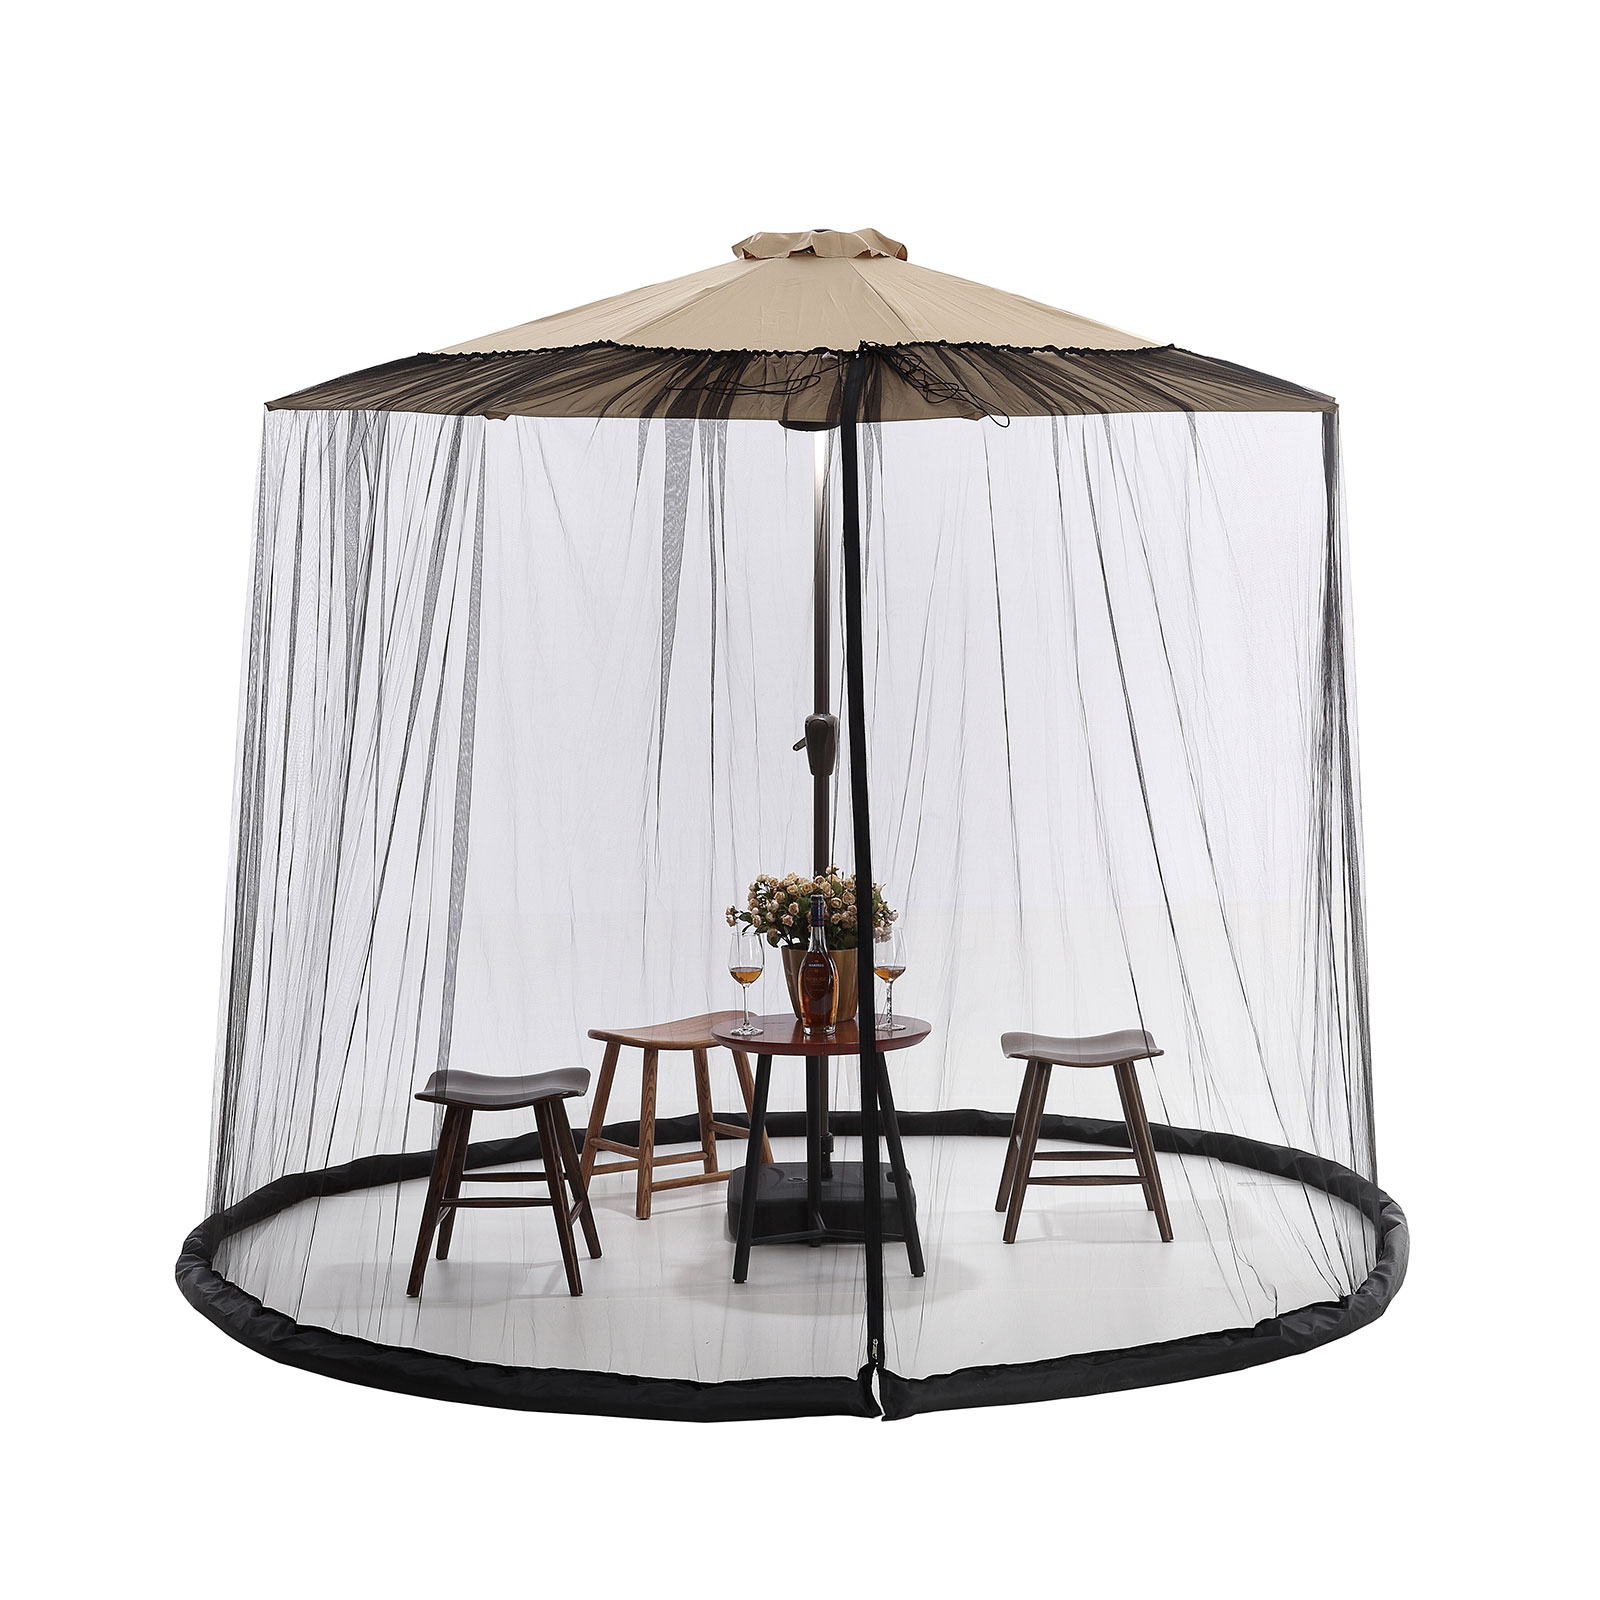 Roman umbrella anti-mosquito netting